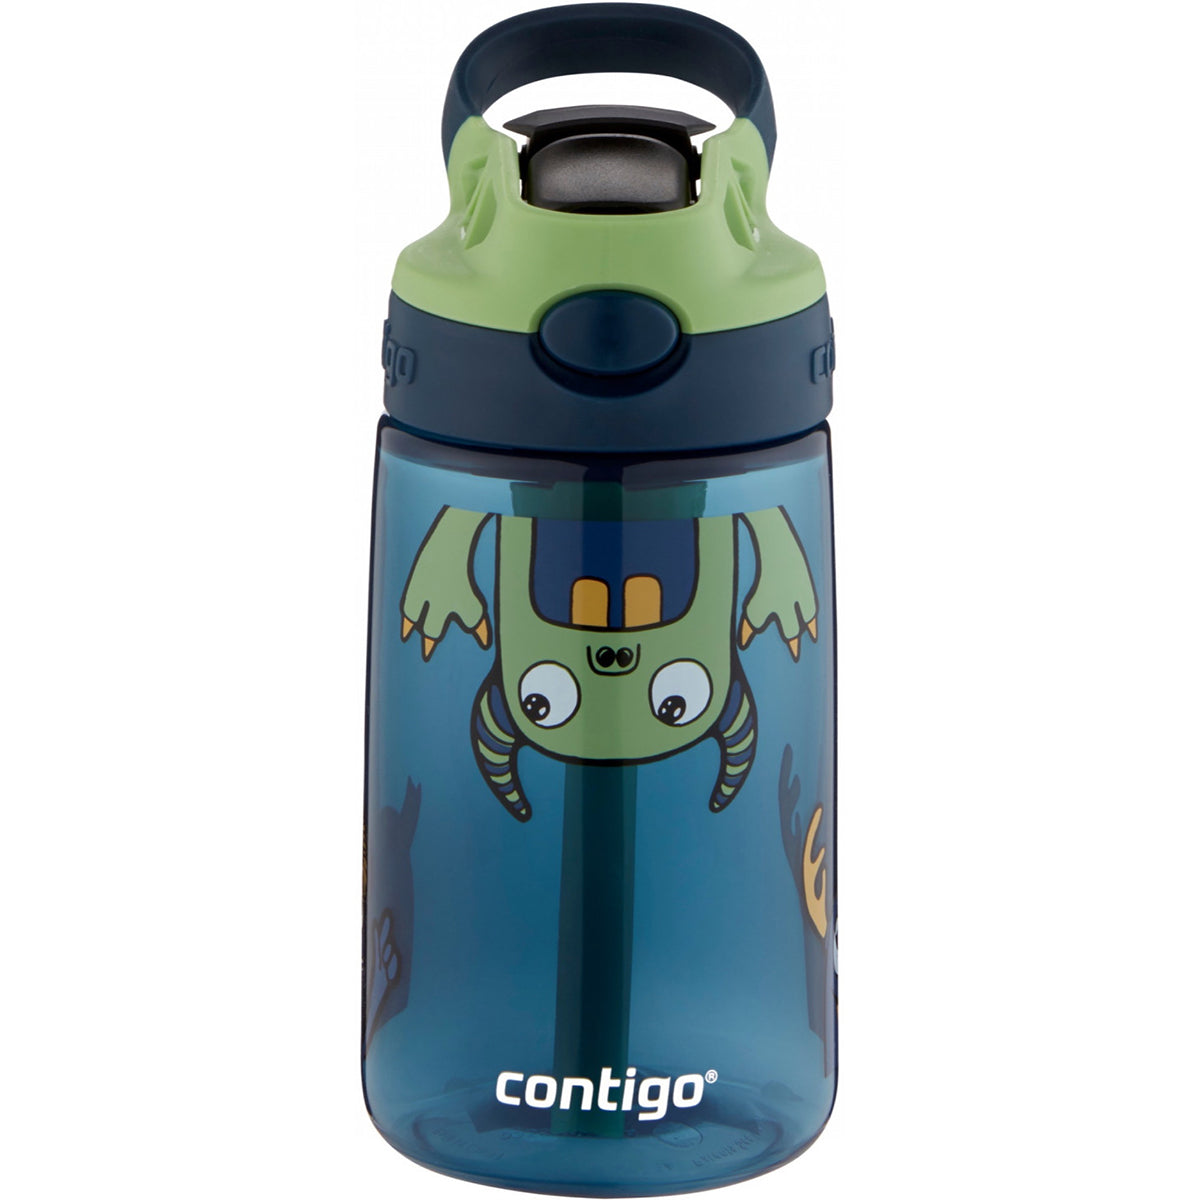 Contigo Kid's 14 oz. Water Bottle 2-Pack - Cactus/Blueberry Cosmo